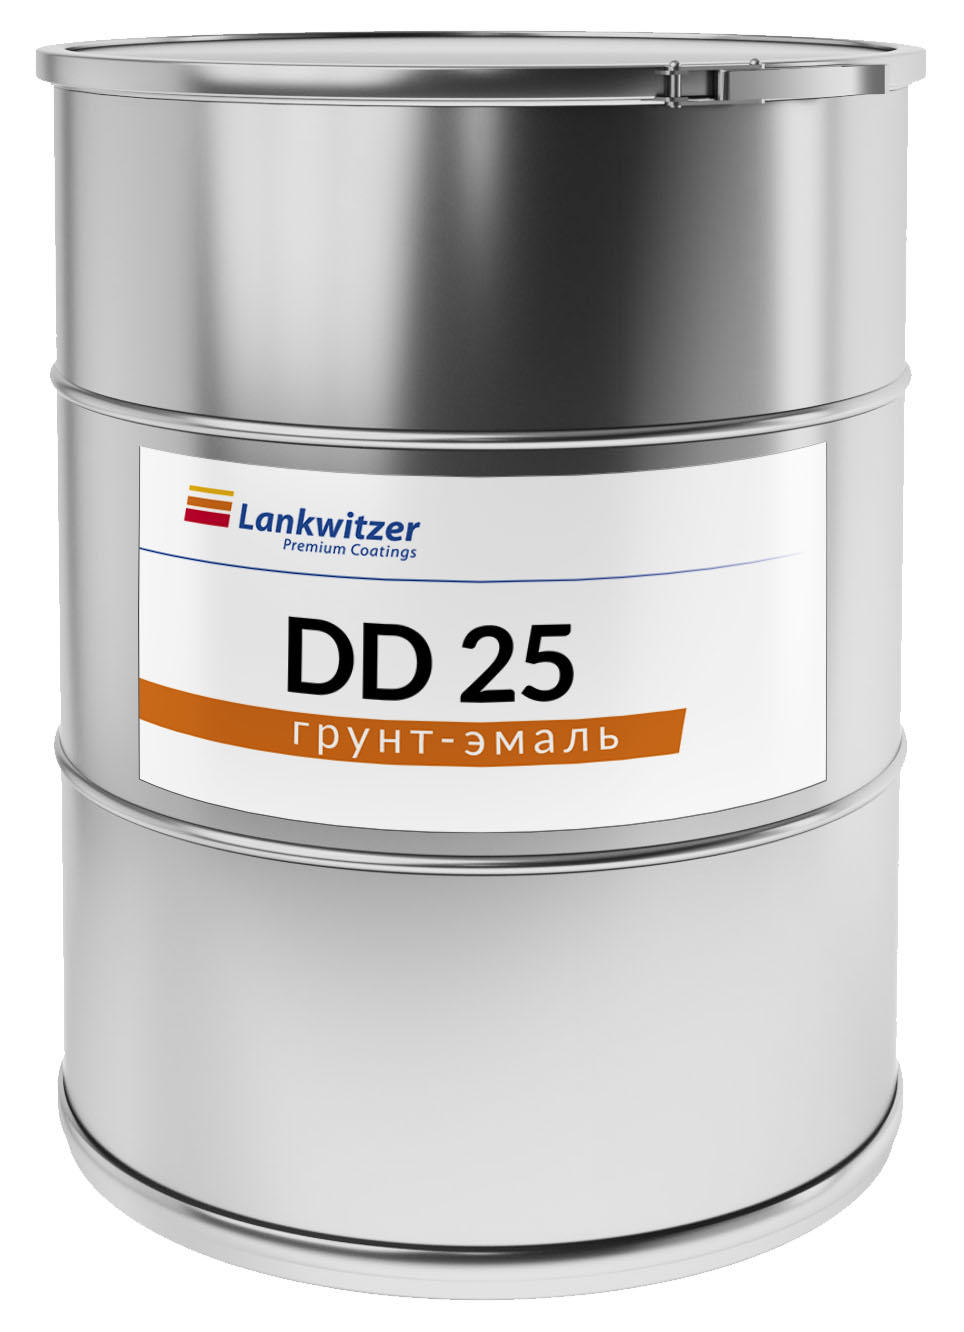 DD 25 грунт-эмаль